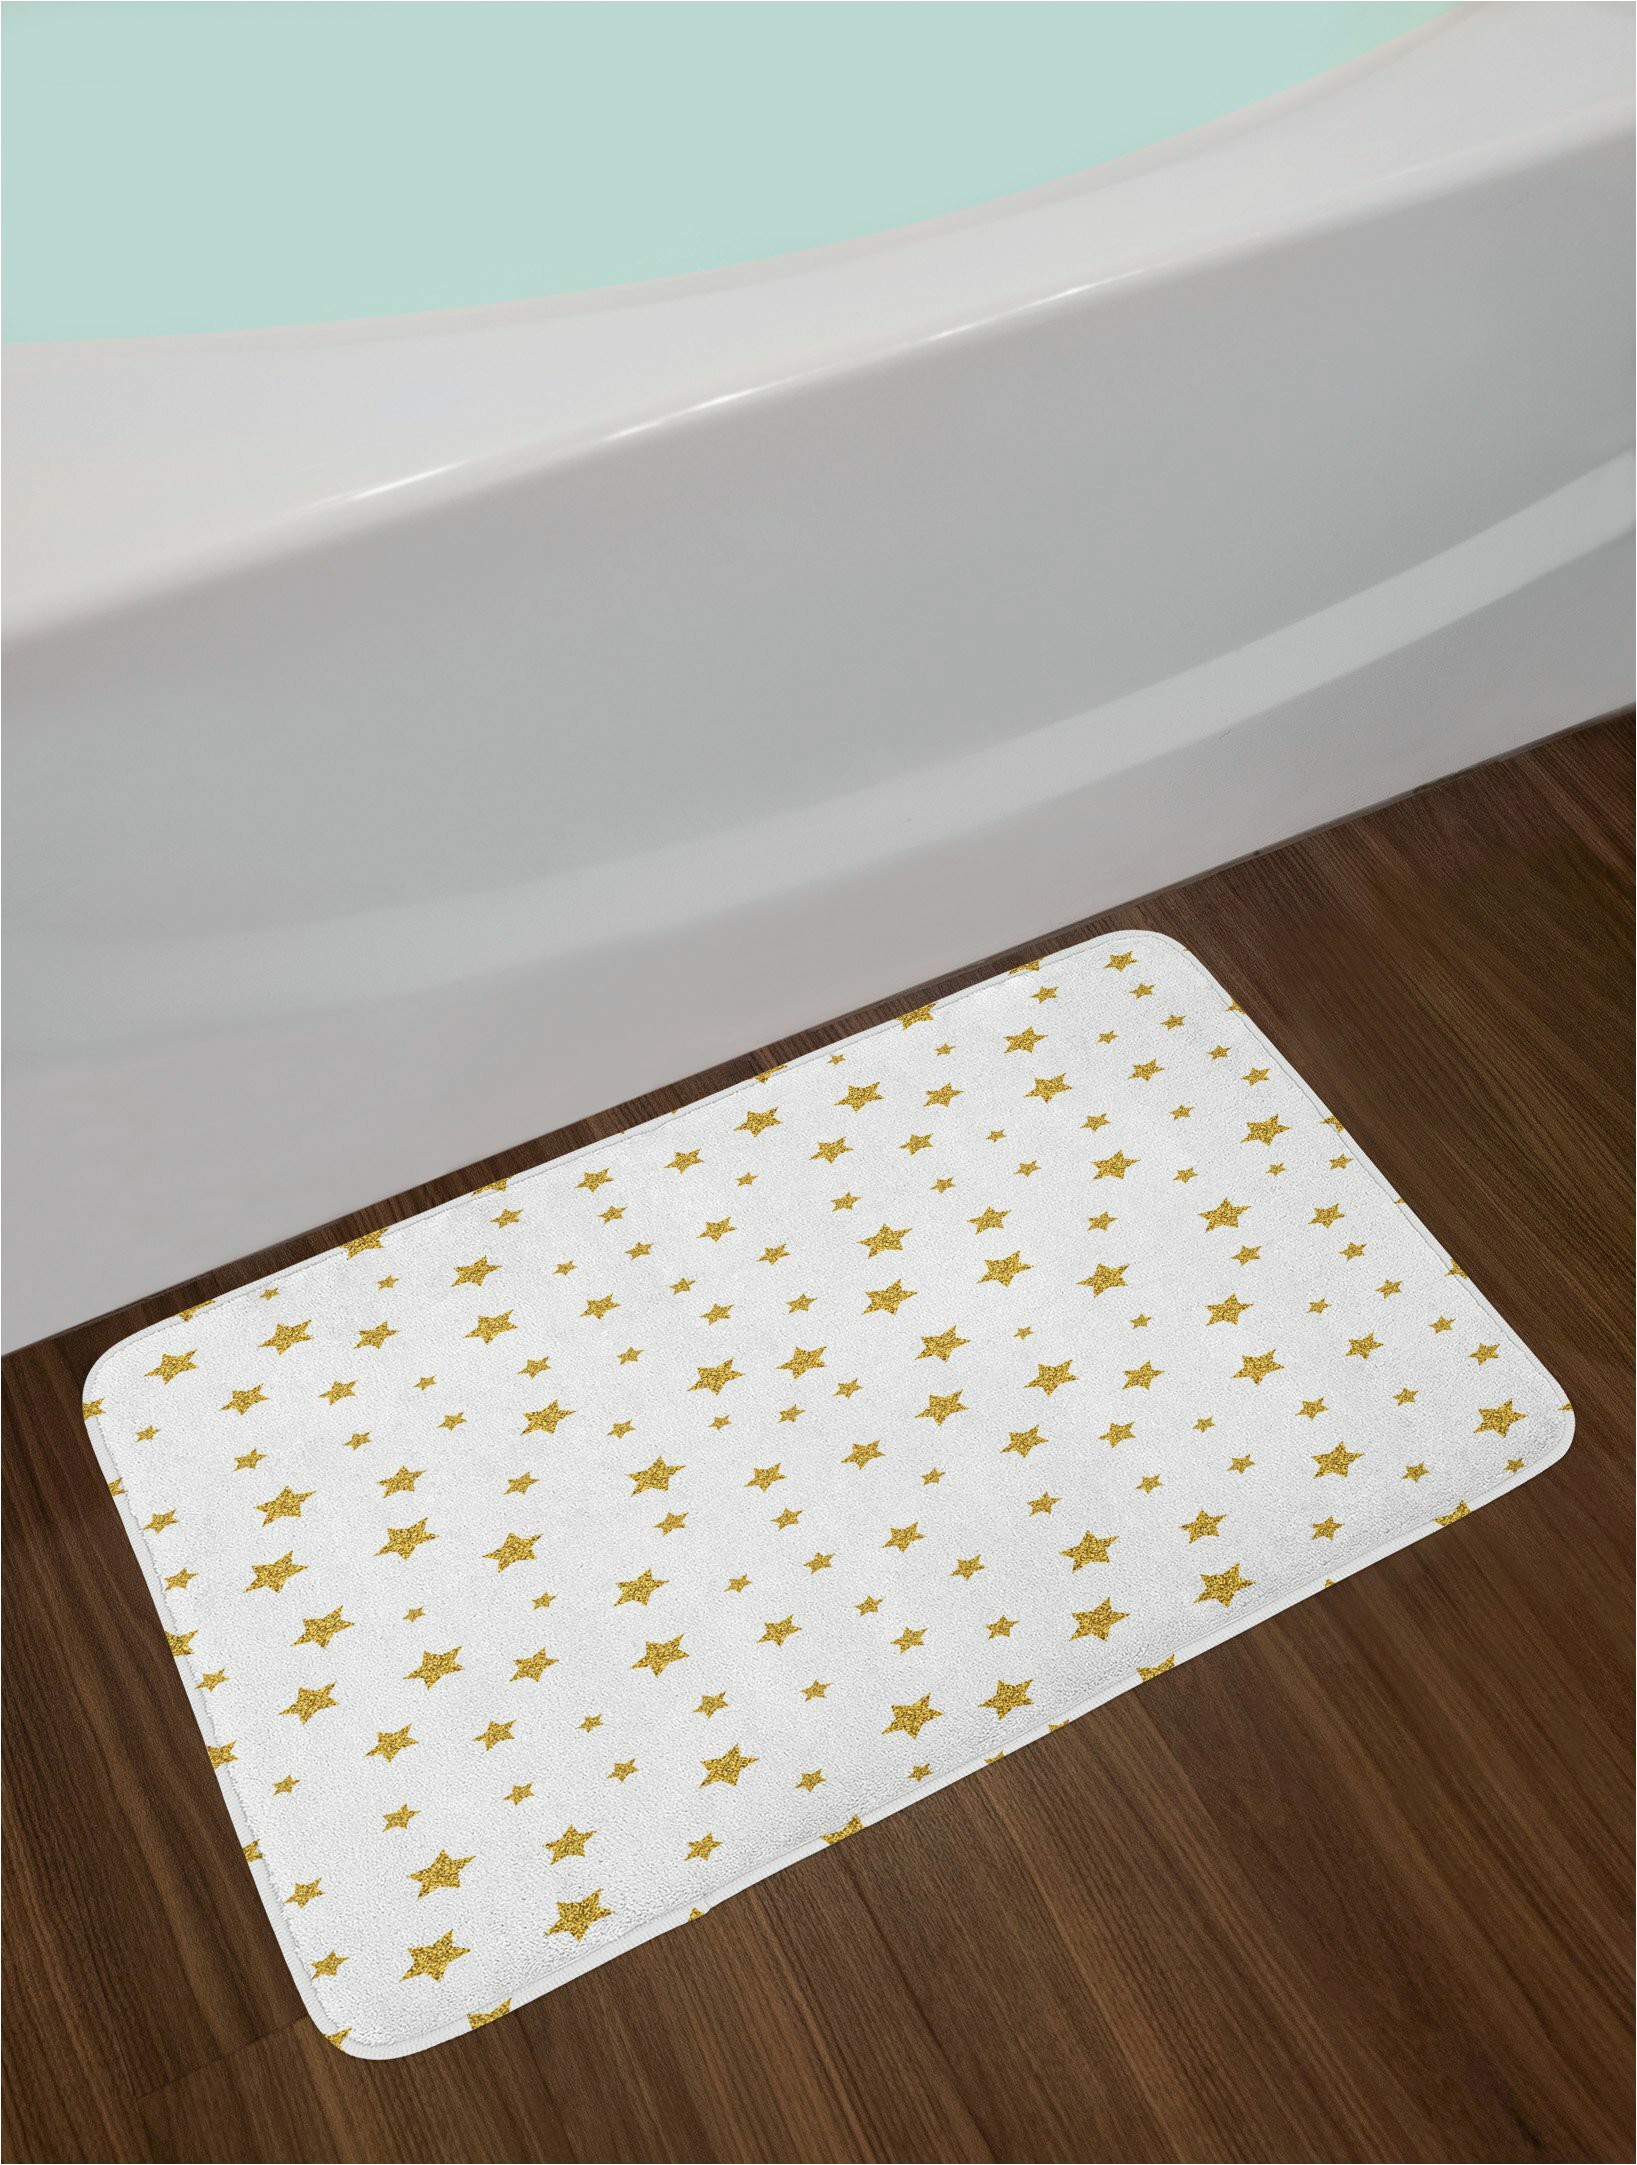 Gold and White Bathroom Rugs Gold White Star Bath Rug